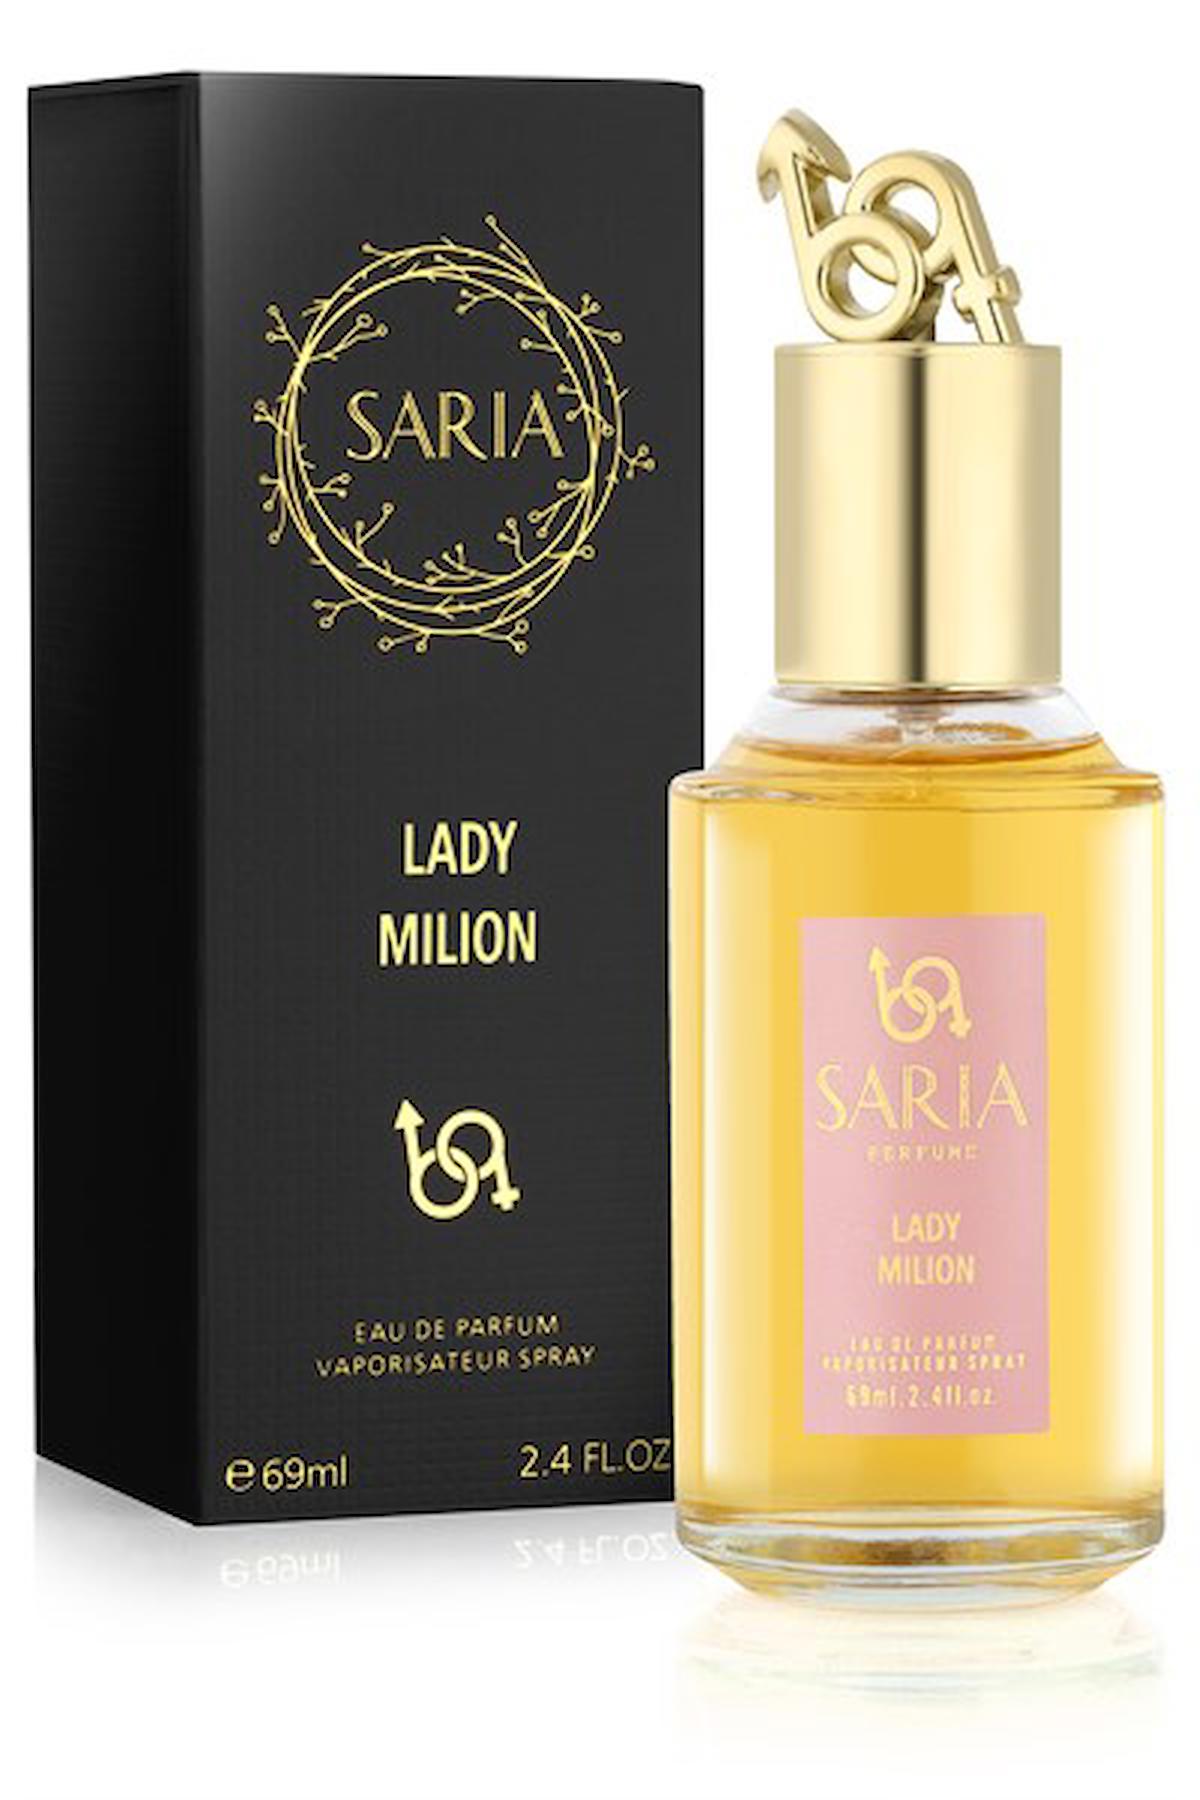 Saria Lady Million EDP Meyvemsi Kadın Parfüm 69 ml